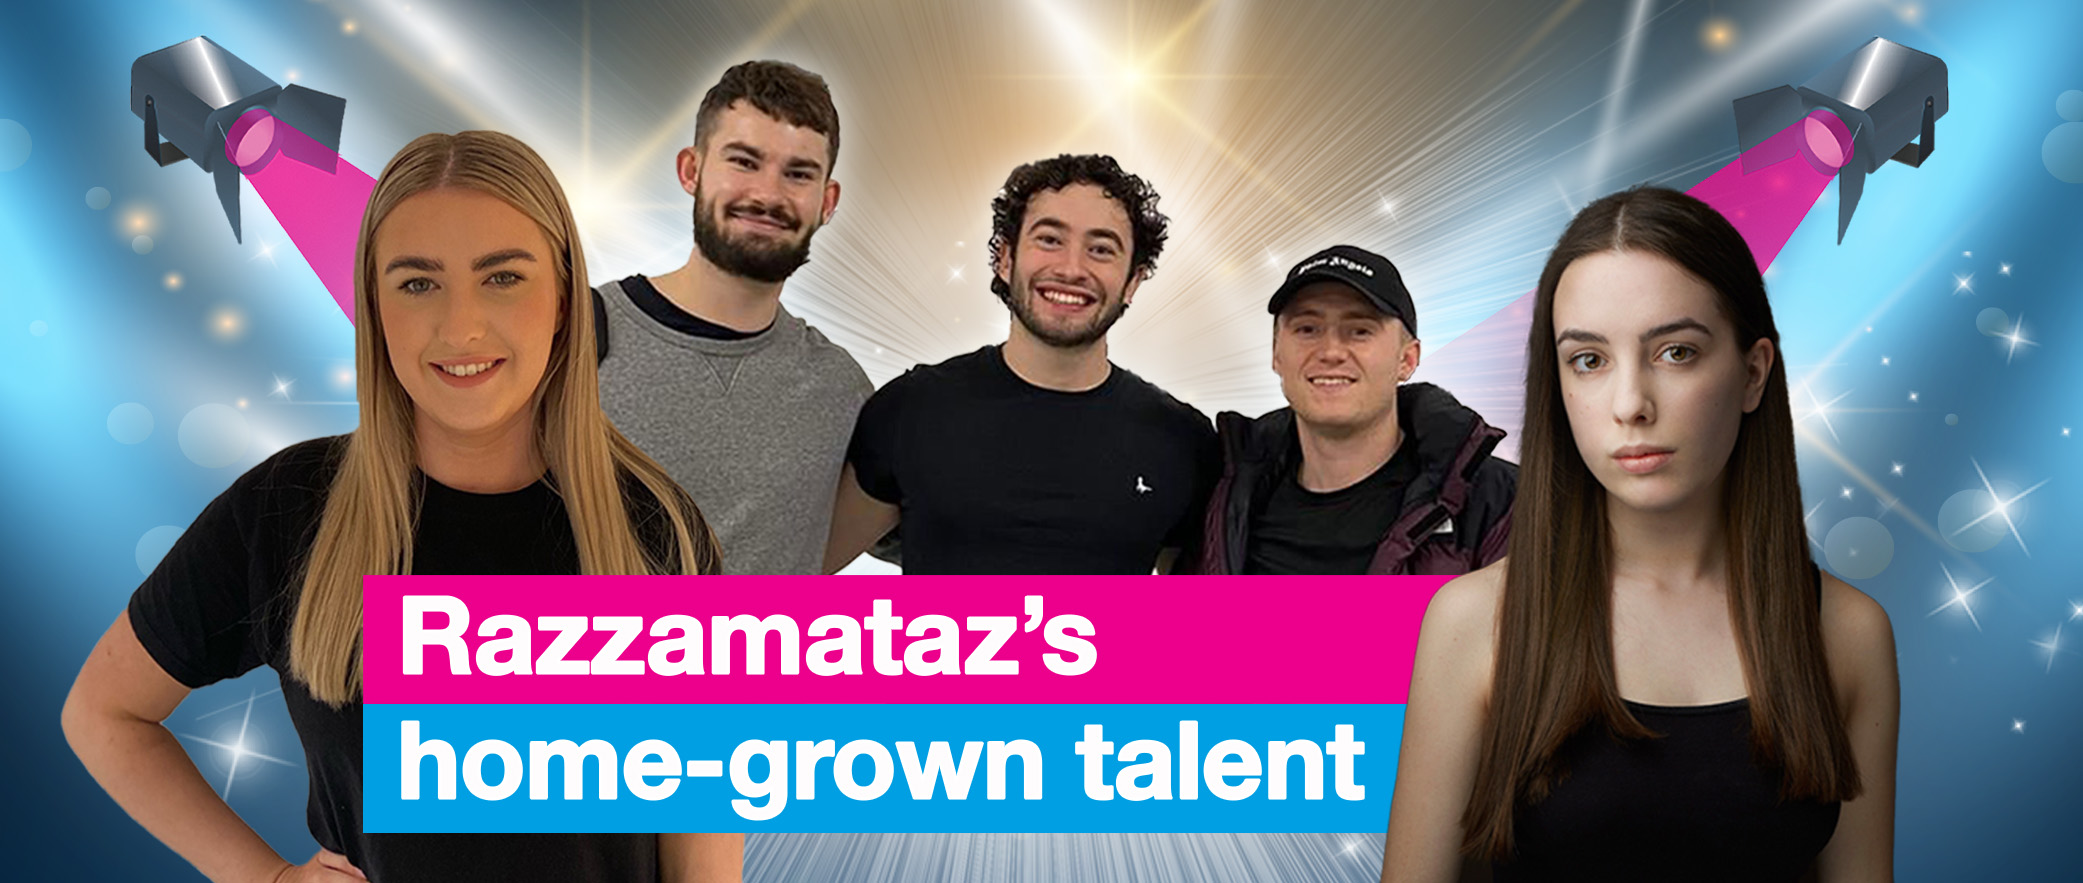 Razzamataz home-grown talent